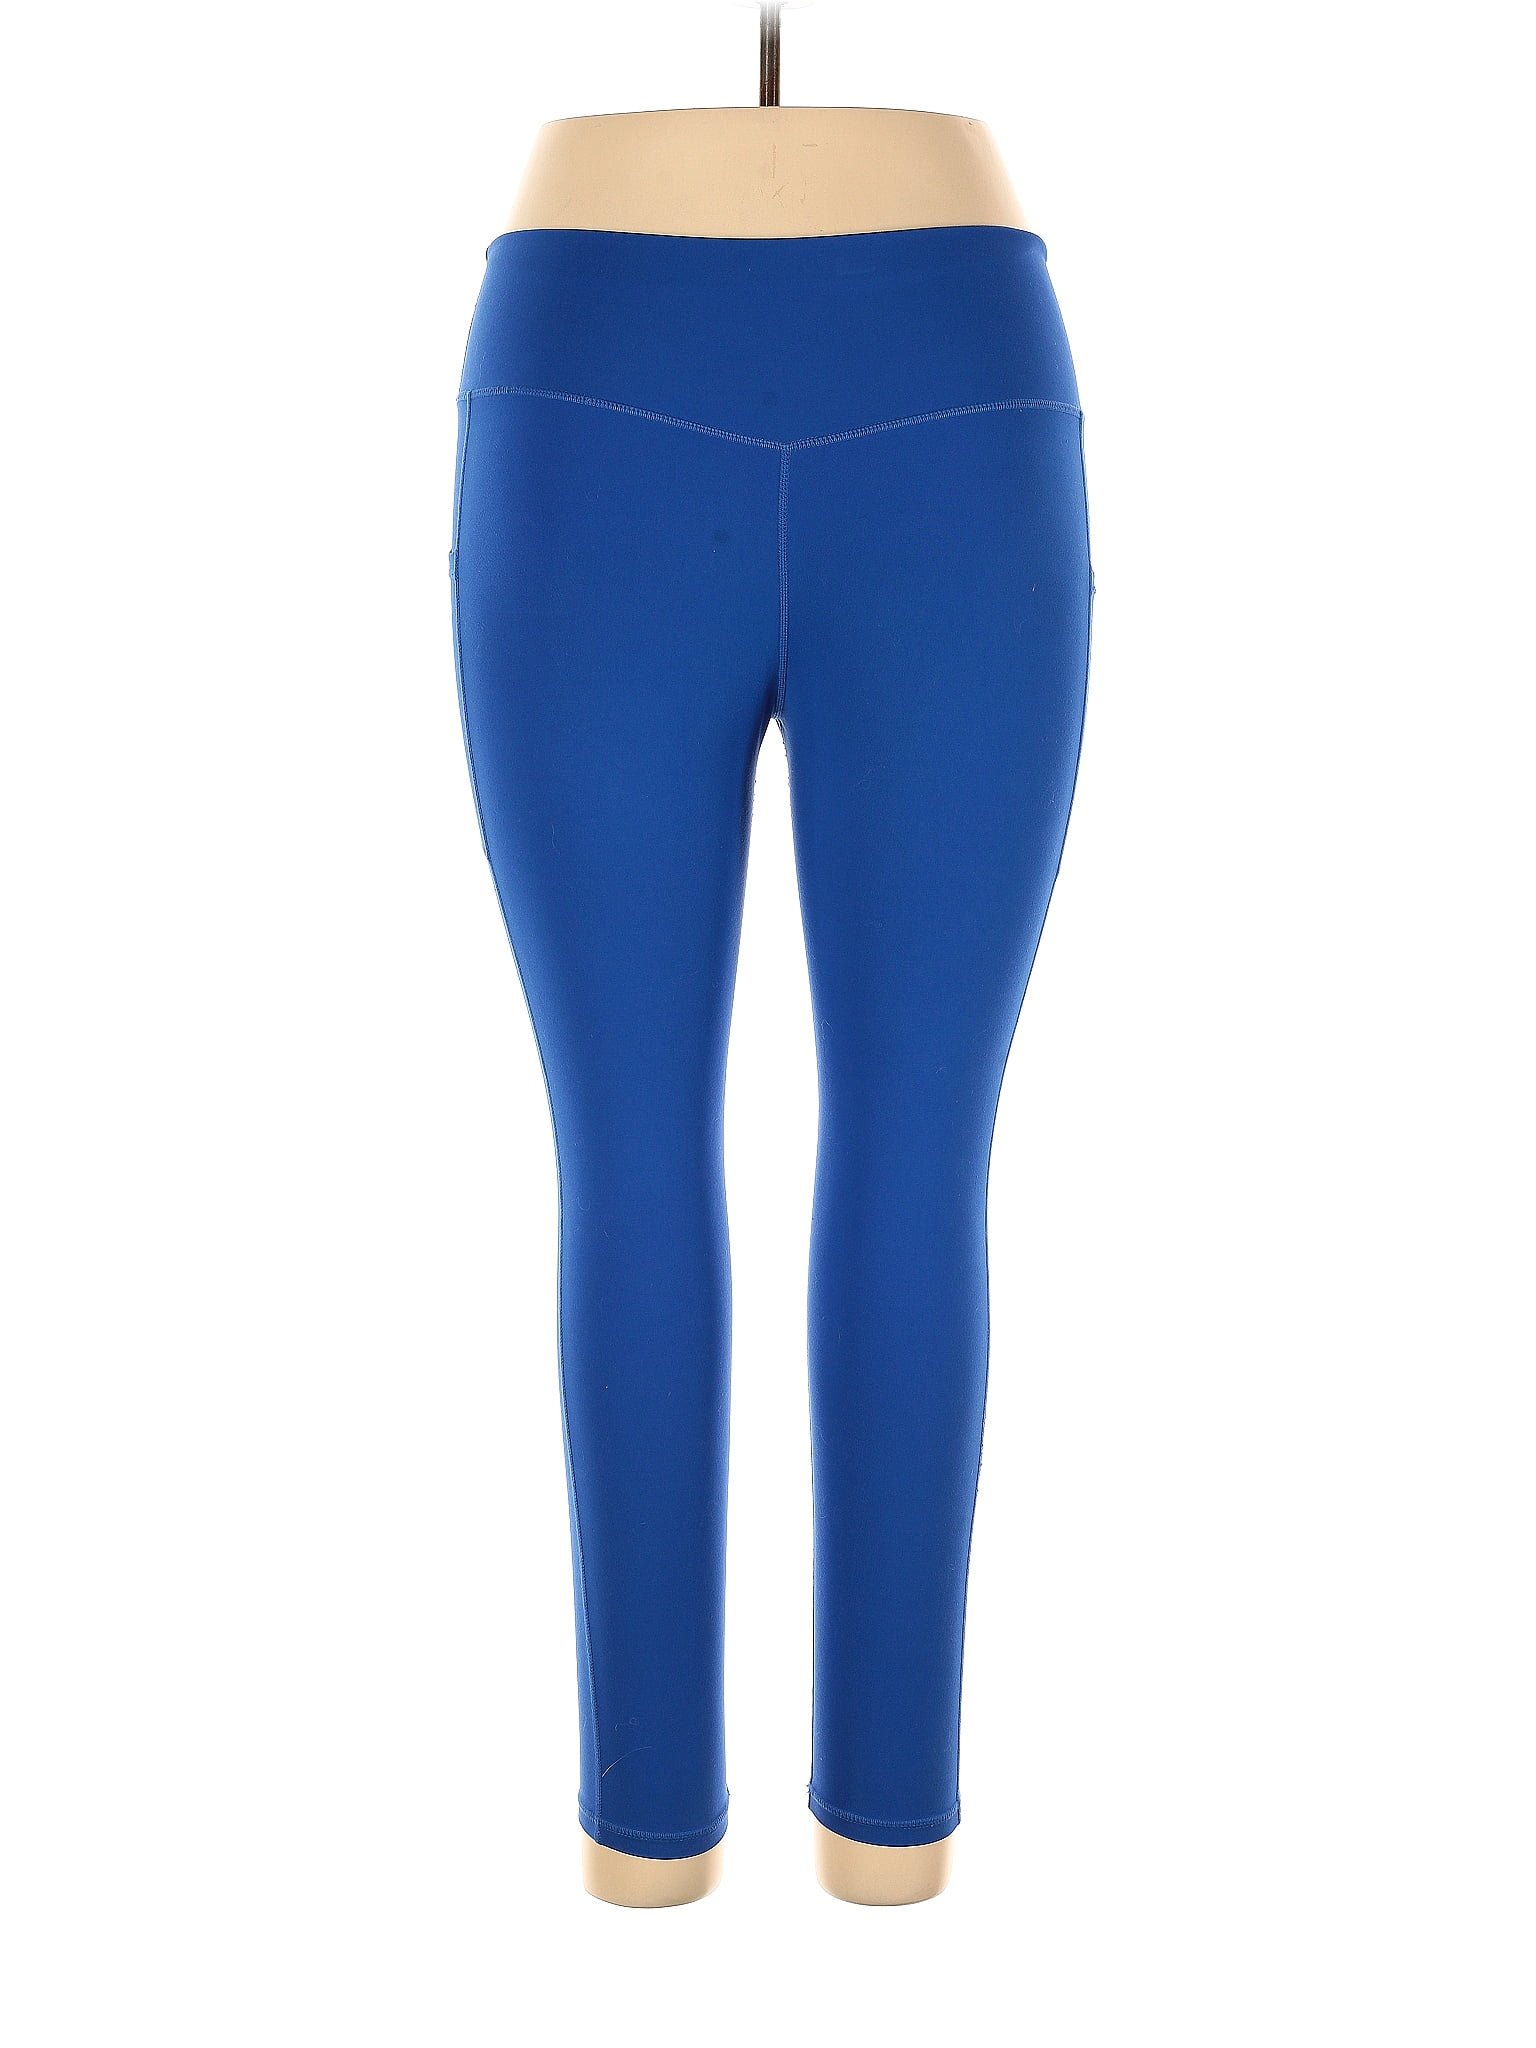 colorfulkoala Solid Sapphire Blue Leggings Size XL - 46% off